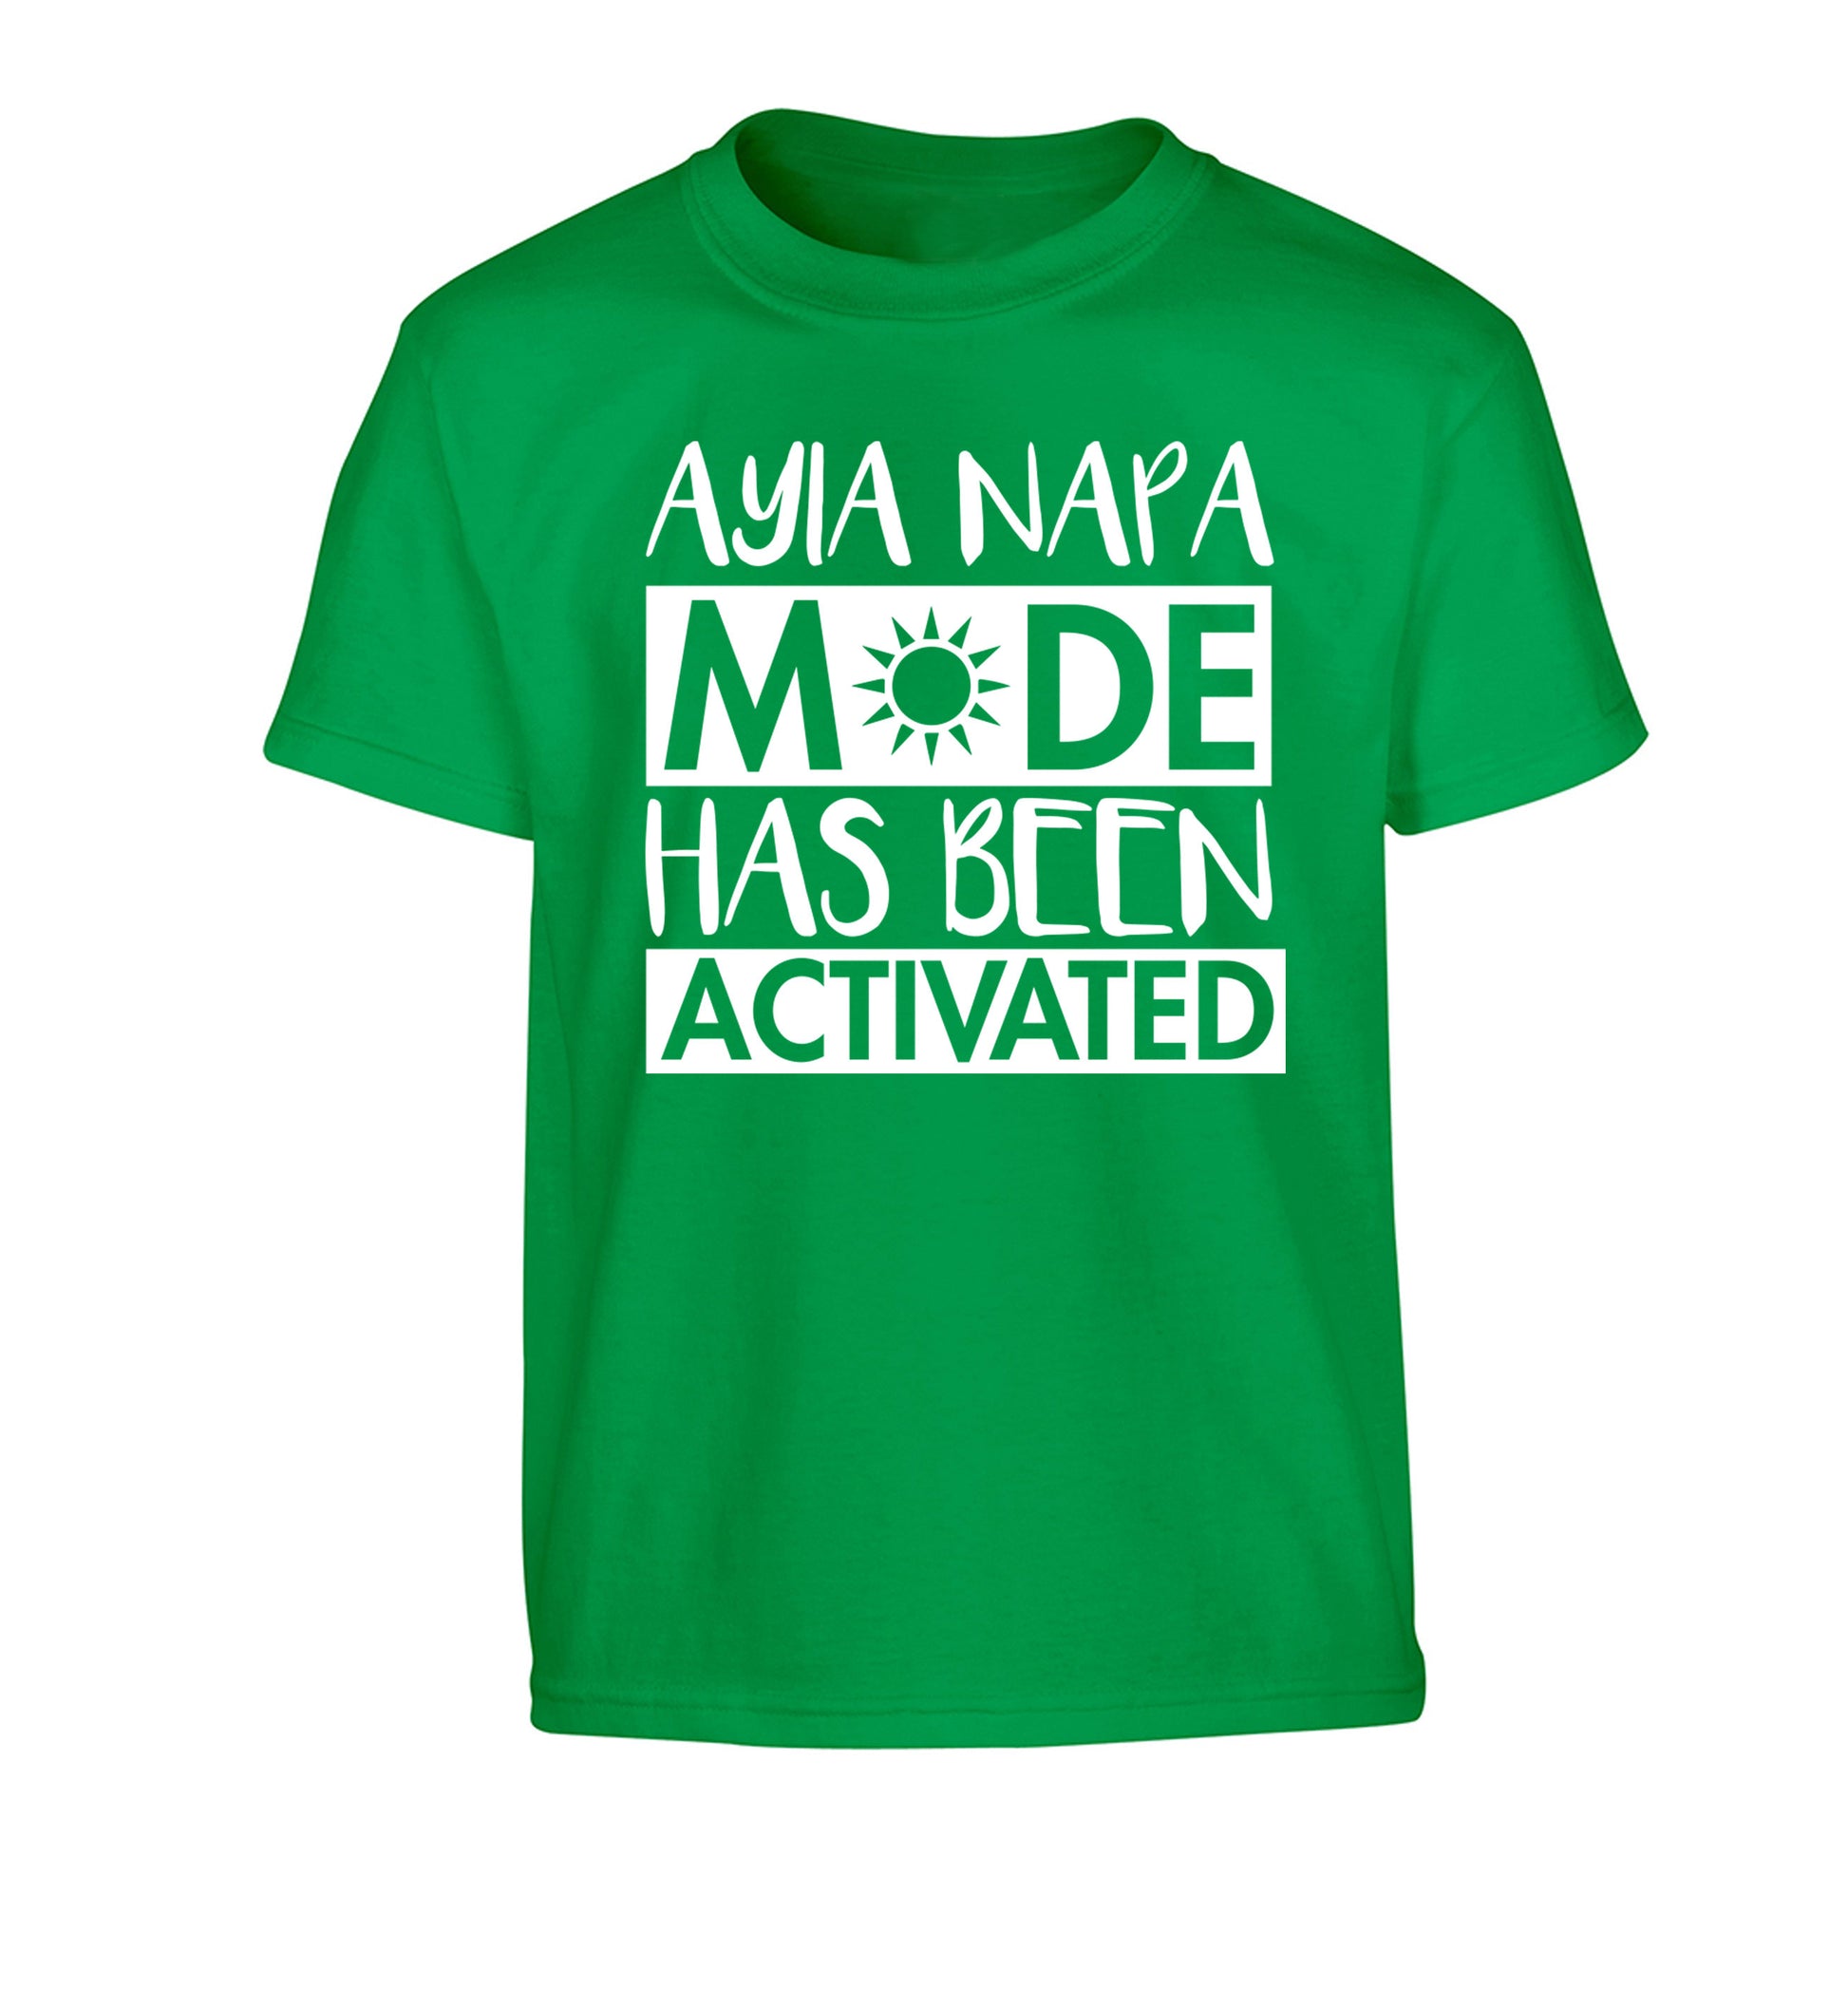 Aiya Napa mode has been activated Children's green Tshirt 12-14 Years